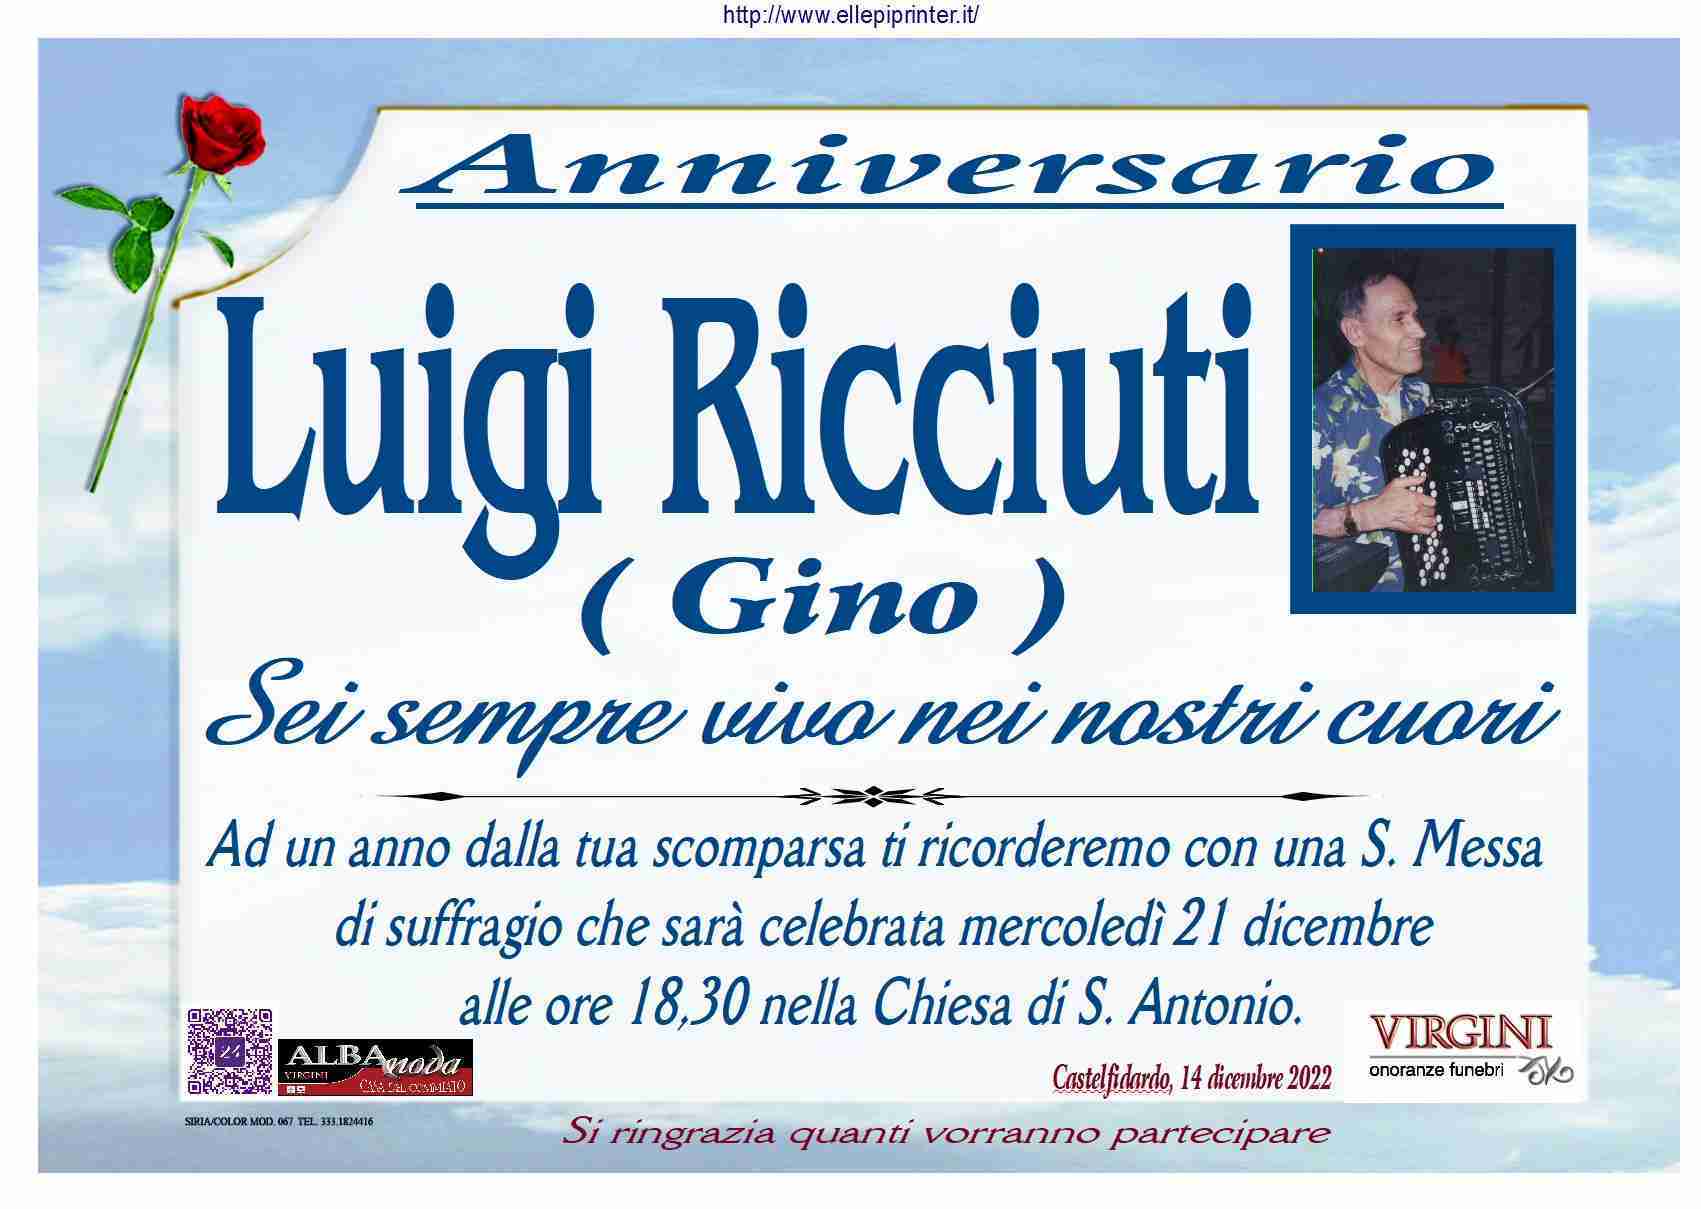 Luigi Ricciuti